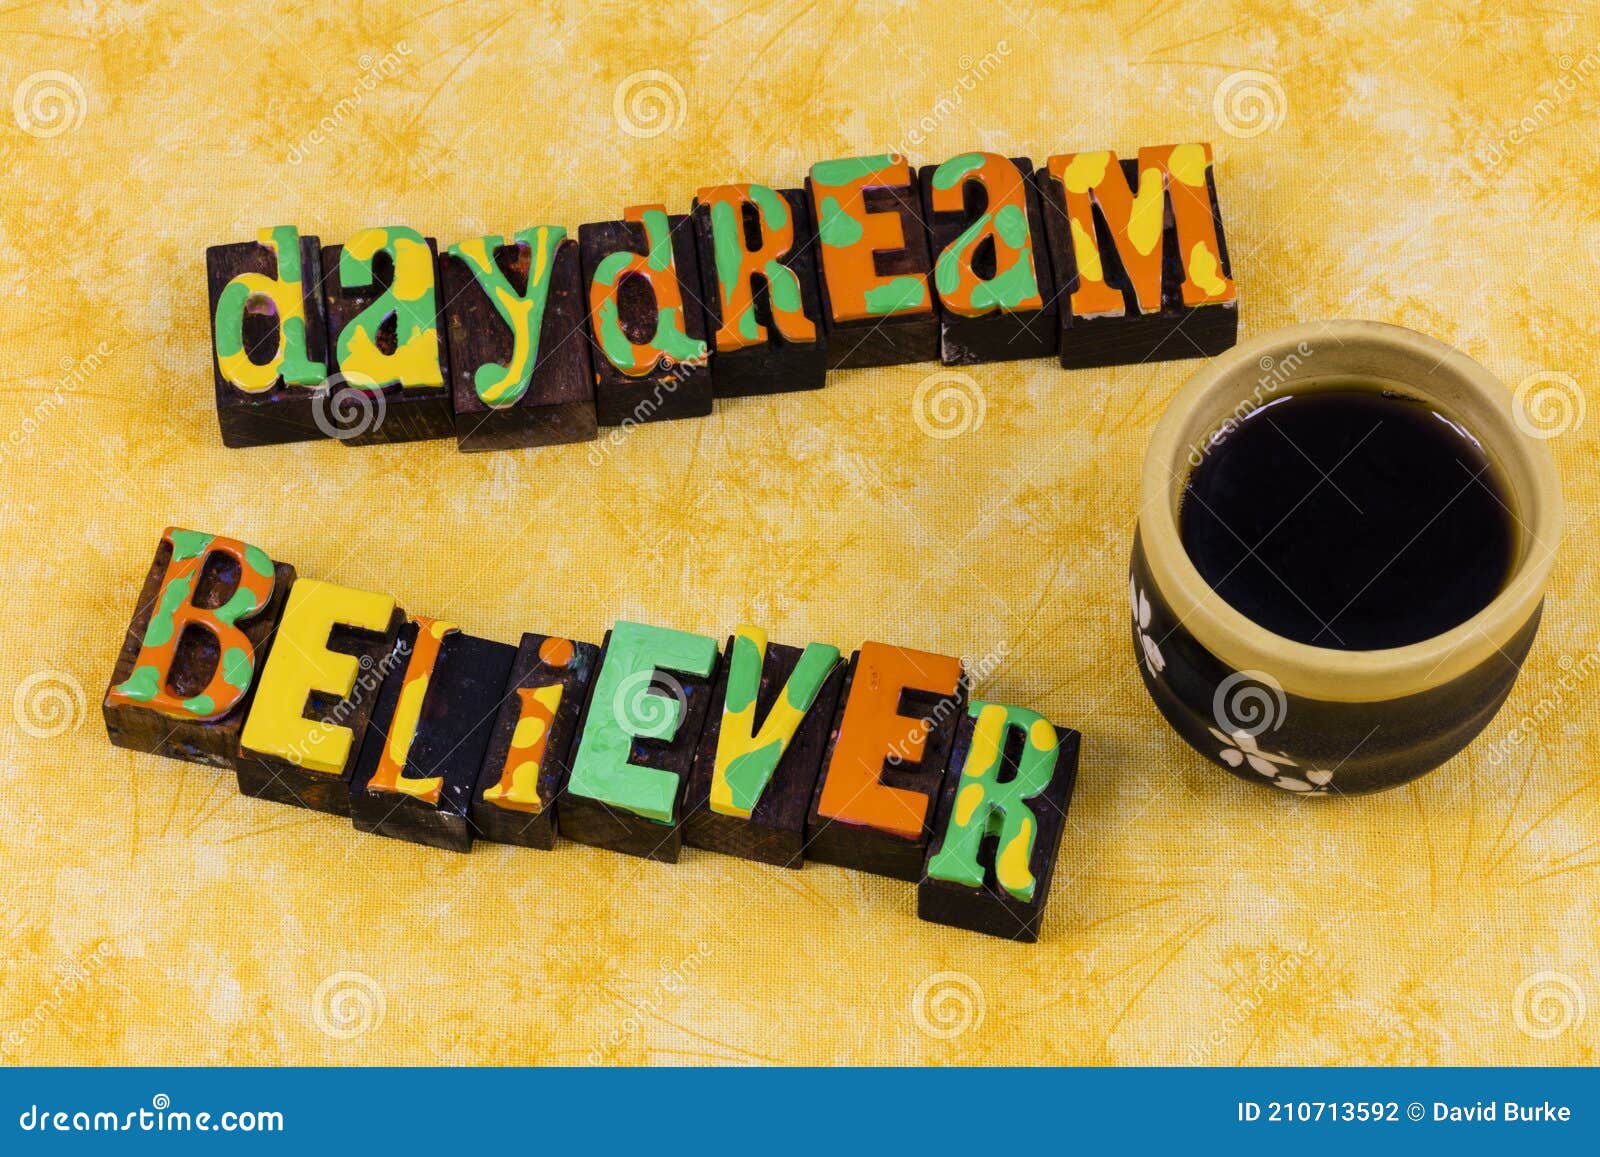 daydream believer carefree lifestyle balance harmony coffee break